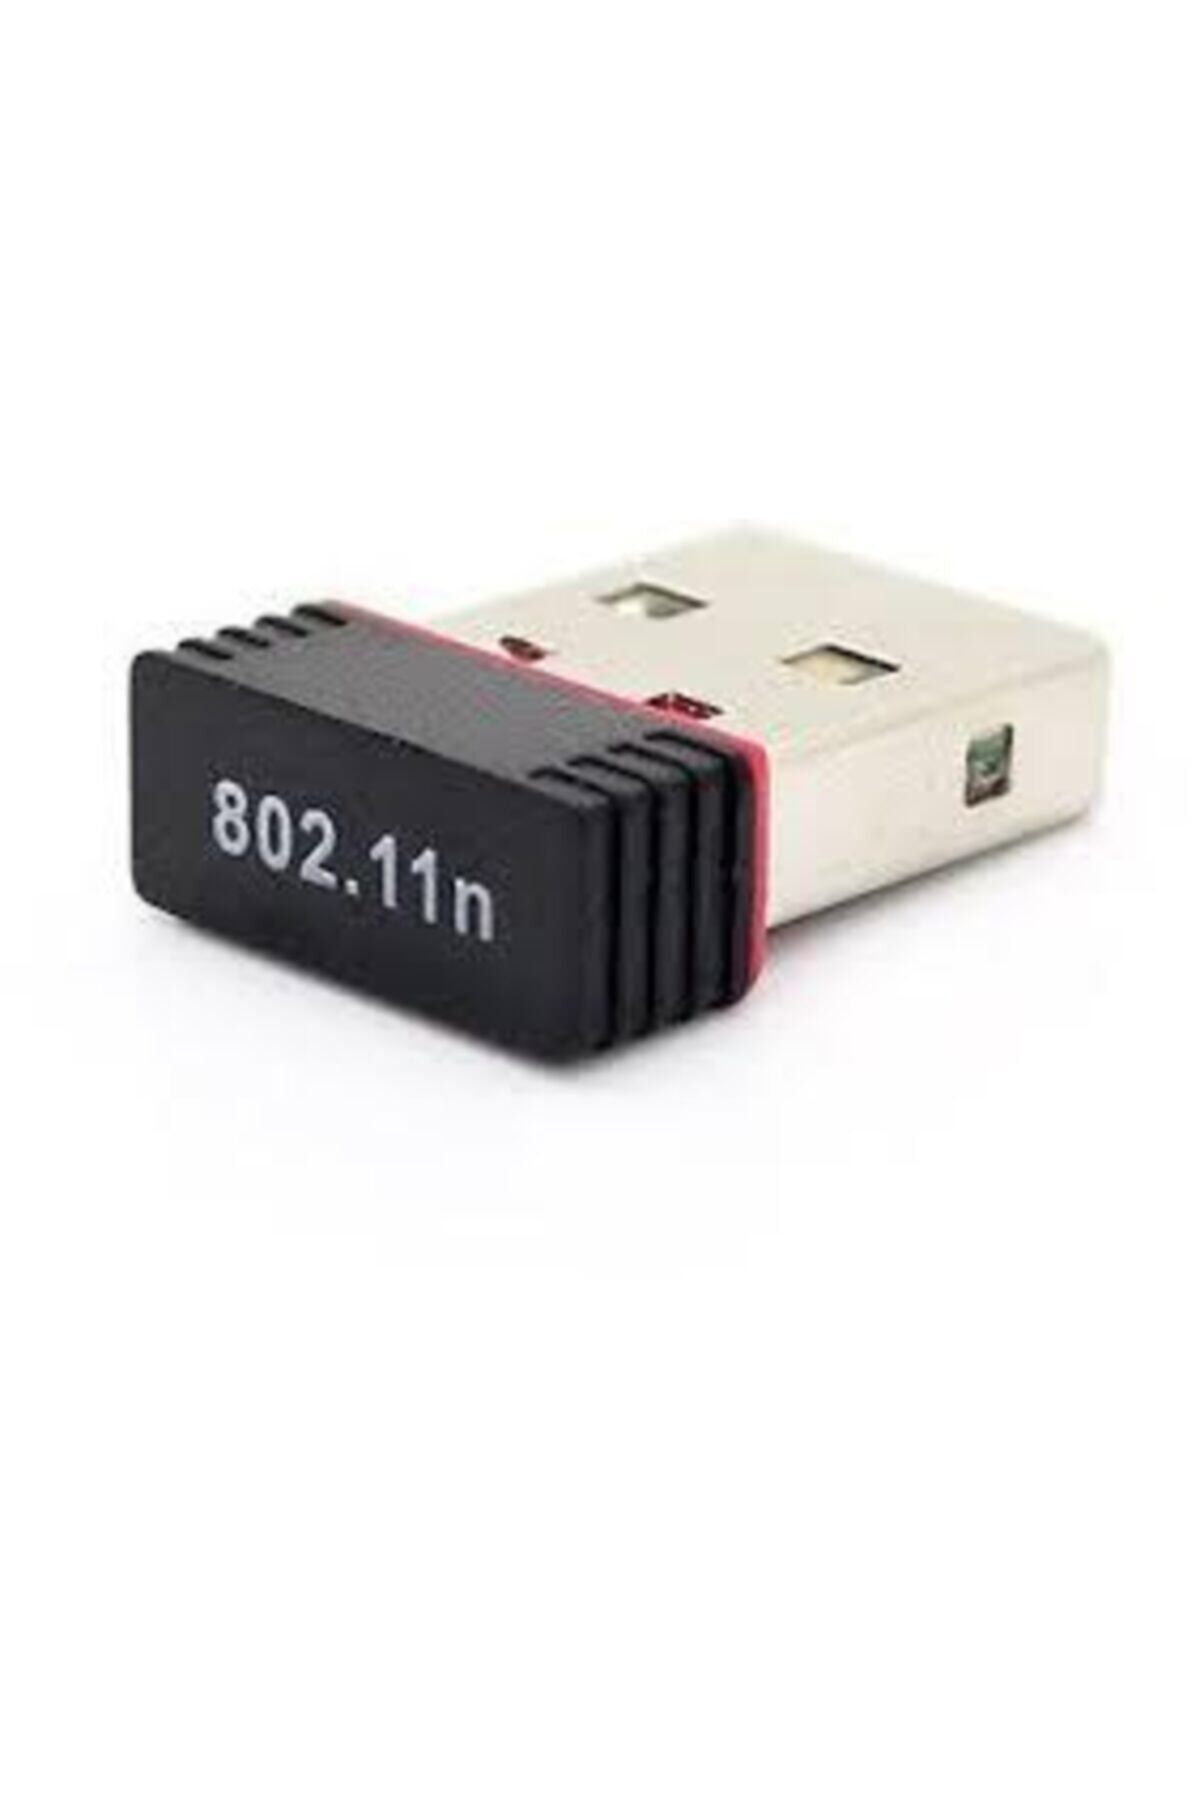 Адаптер беспроводной связи. USB WIFI адаптер. USB-B WIFI адаптер. WIFI адаптер юсб. 802.11N USB Wireless lan Card.